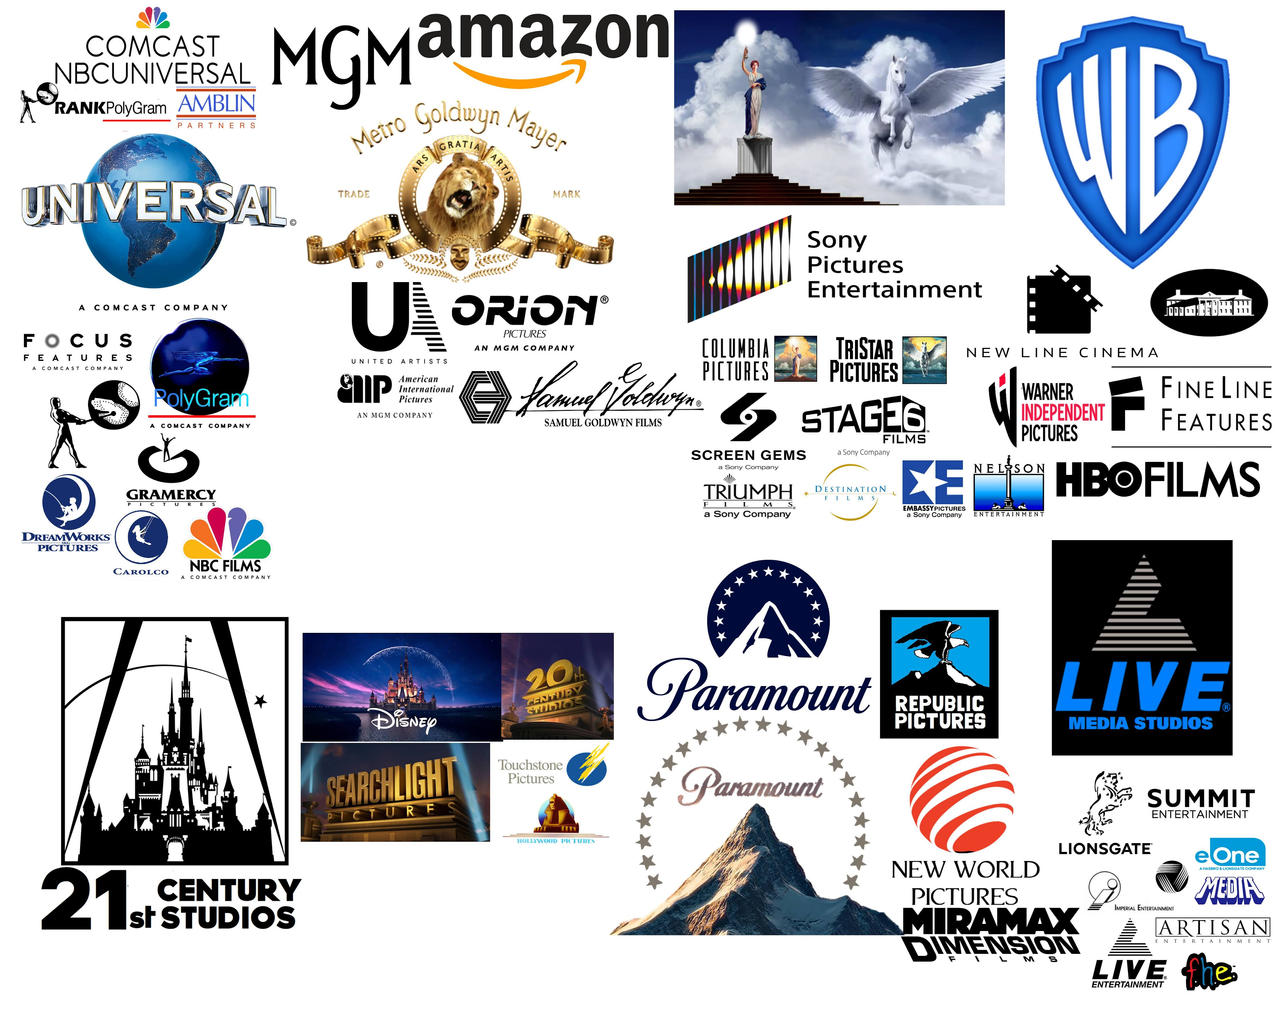 My Favorite Movie Making Companies Logos by TheAgentmanMMT on DeviantArt